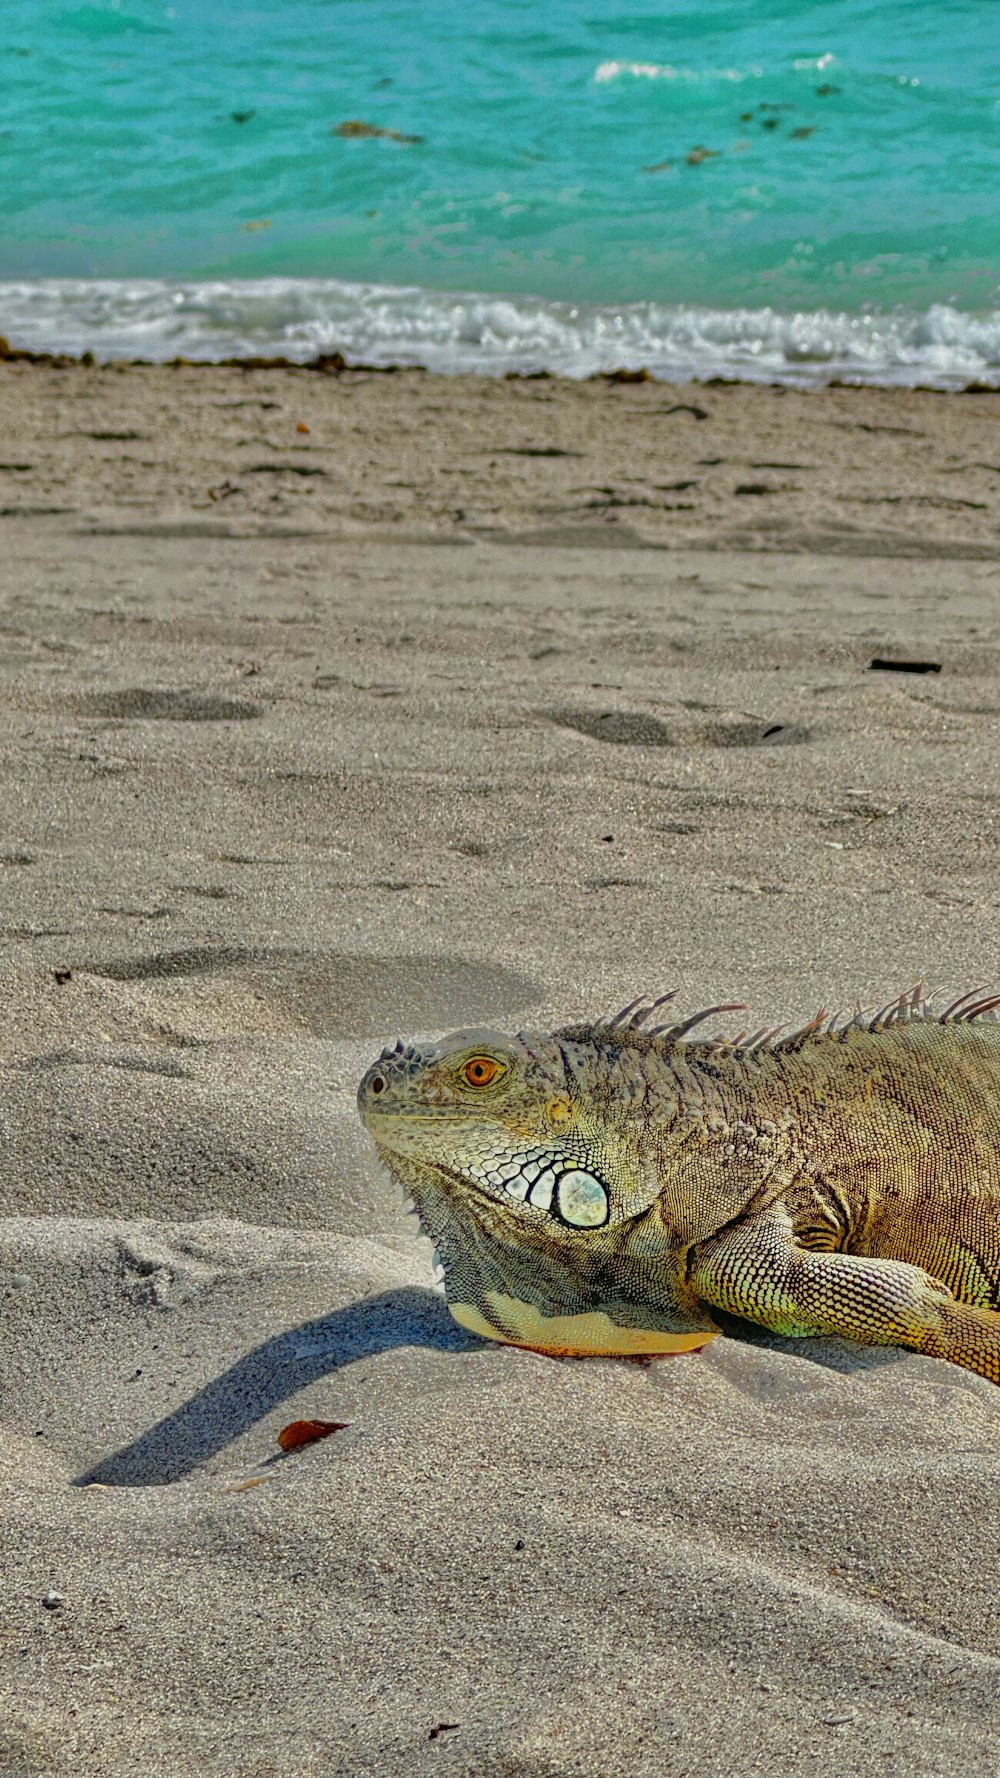 a large lizard laying on a sandy beach